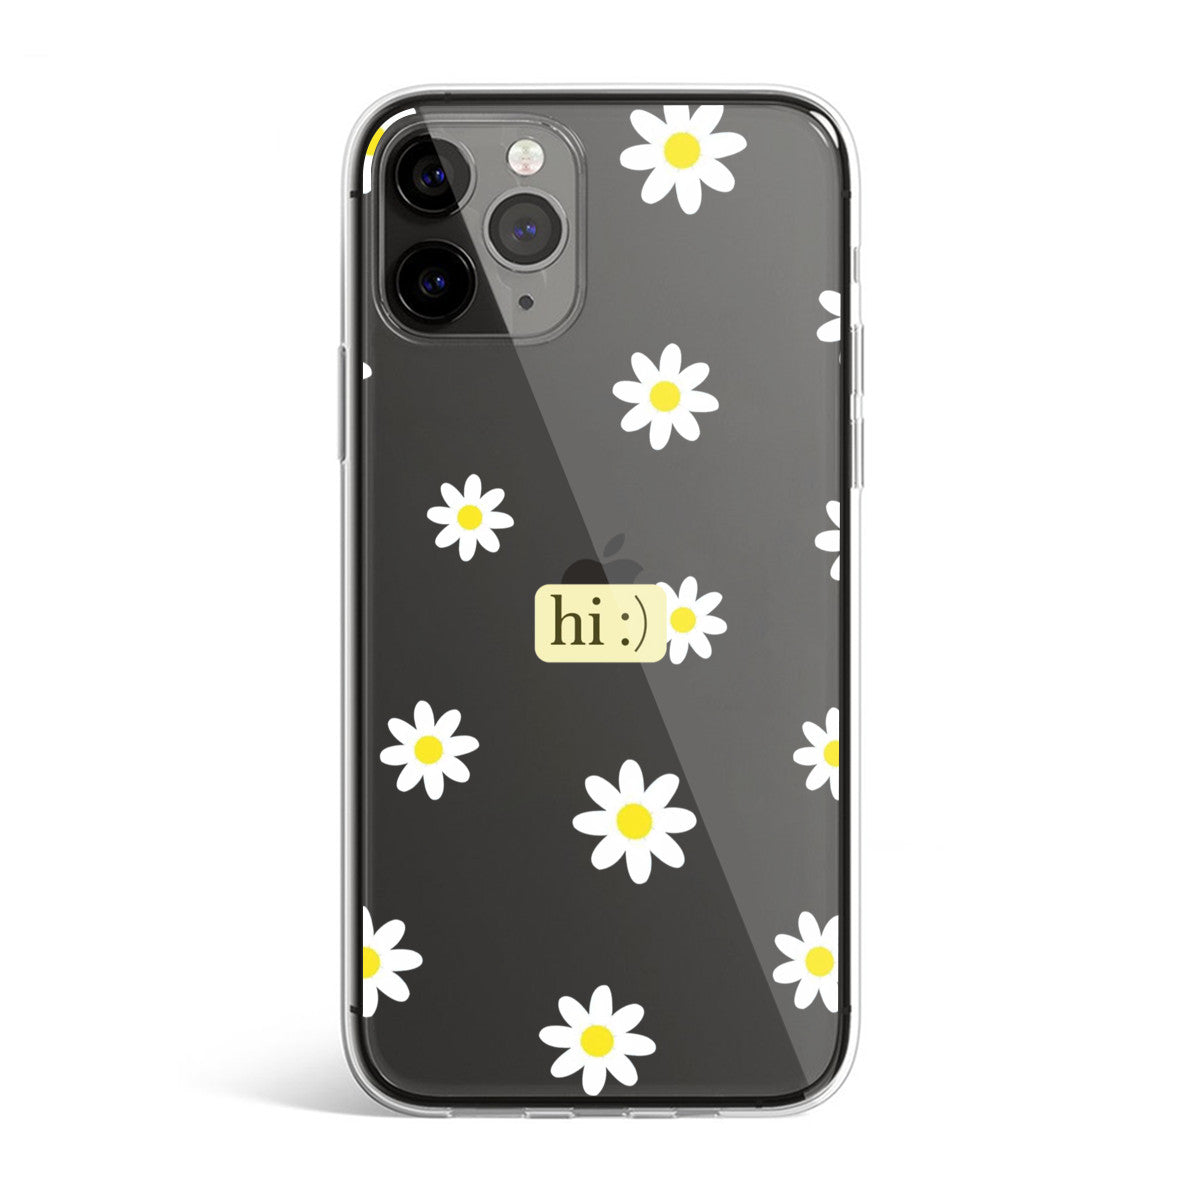 hi : ) - Daisy - iPhone Case